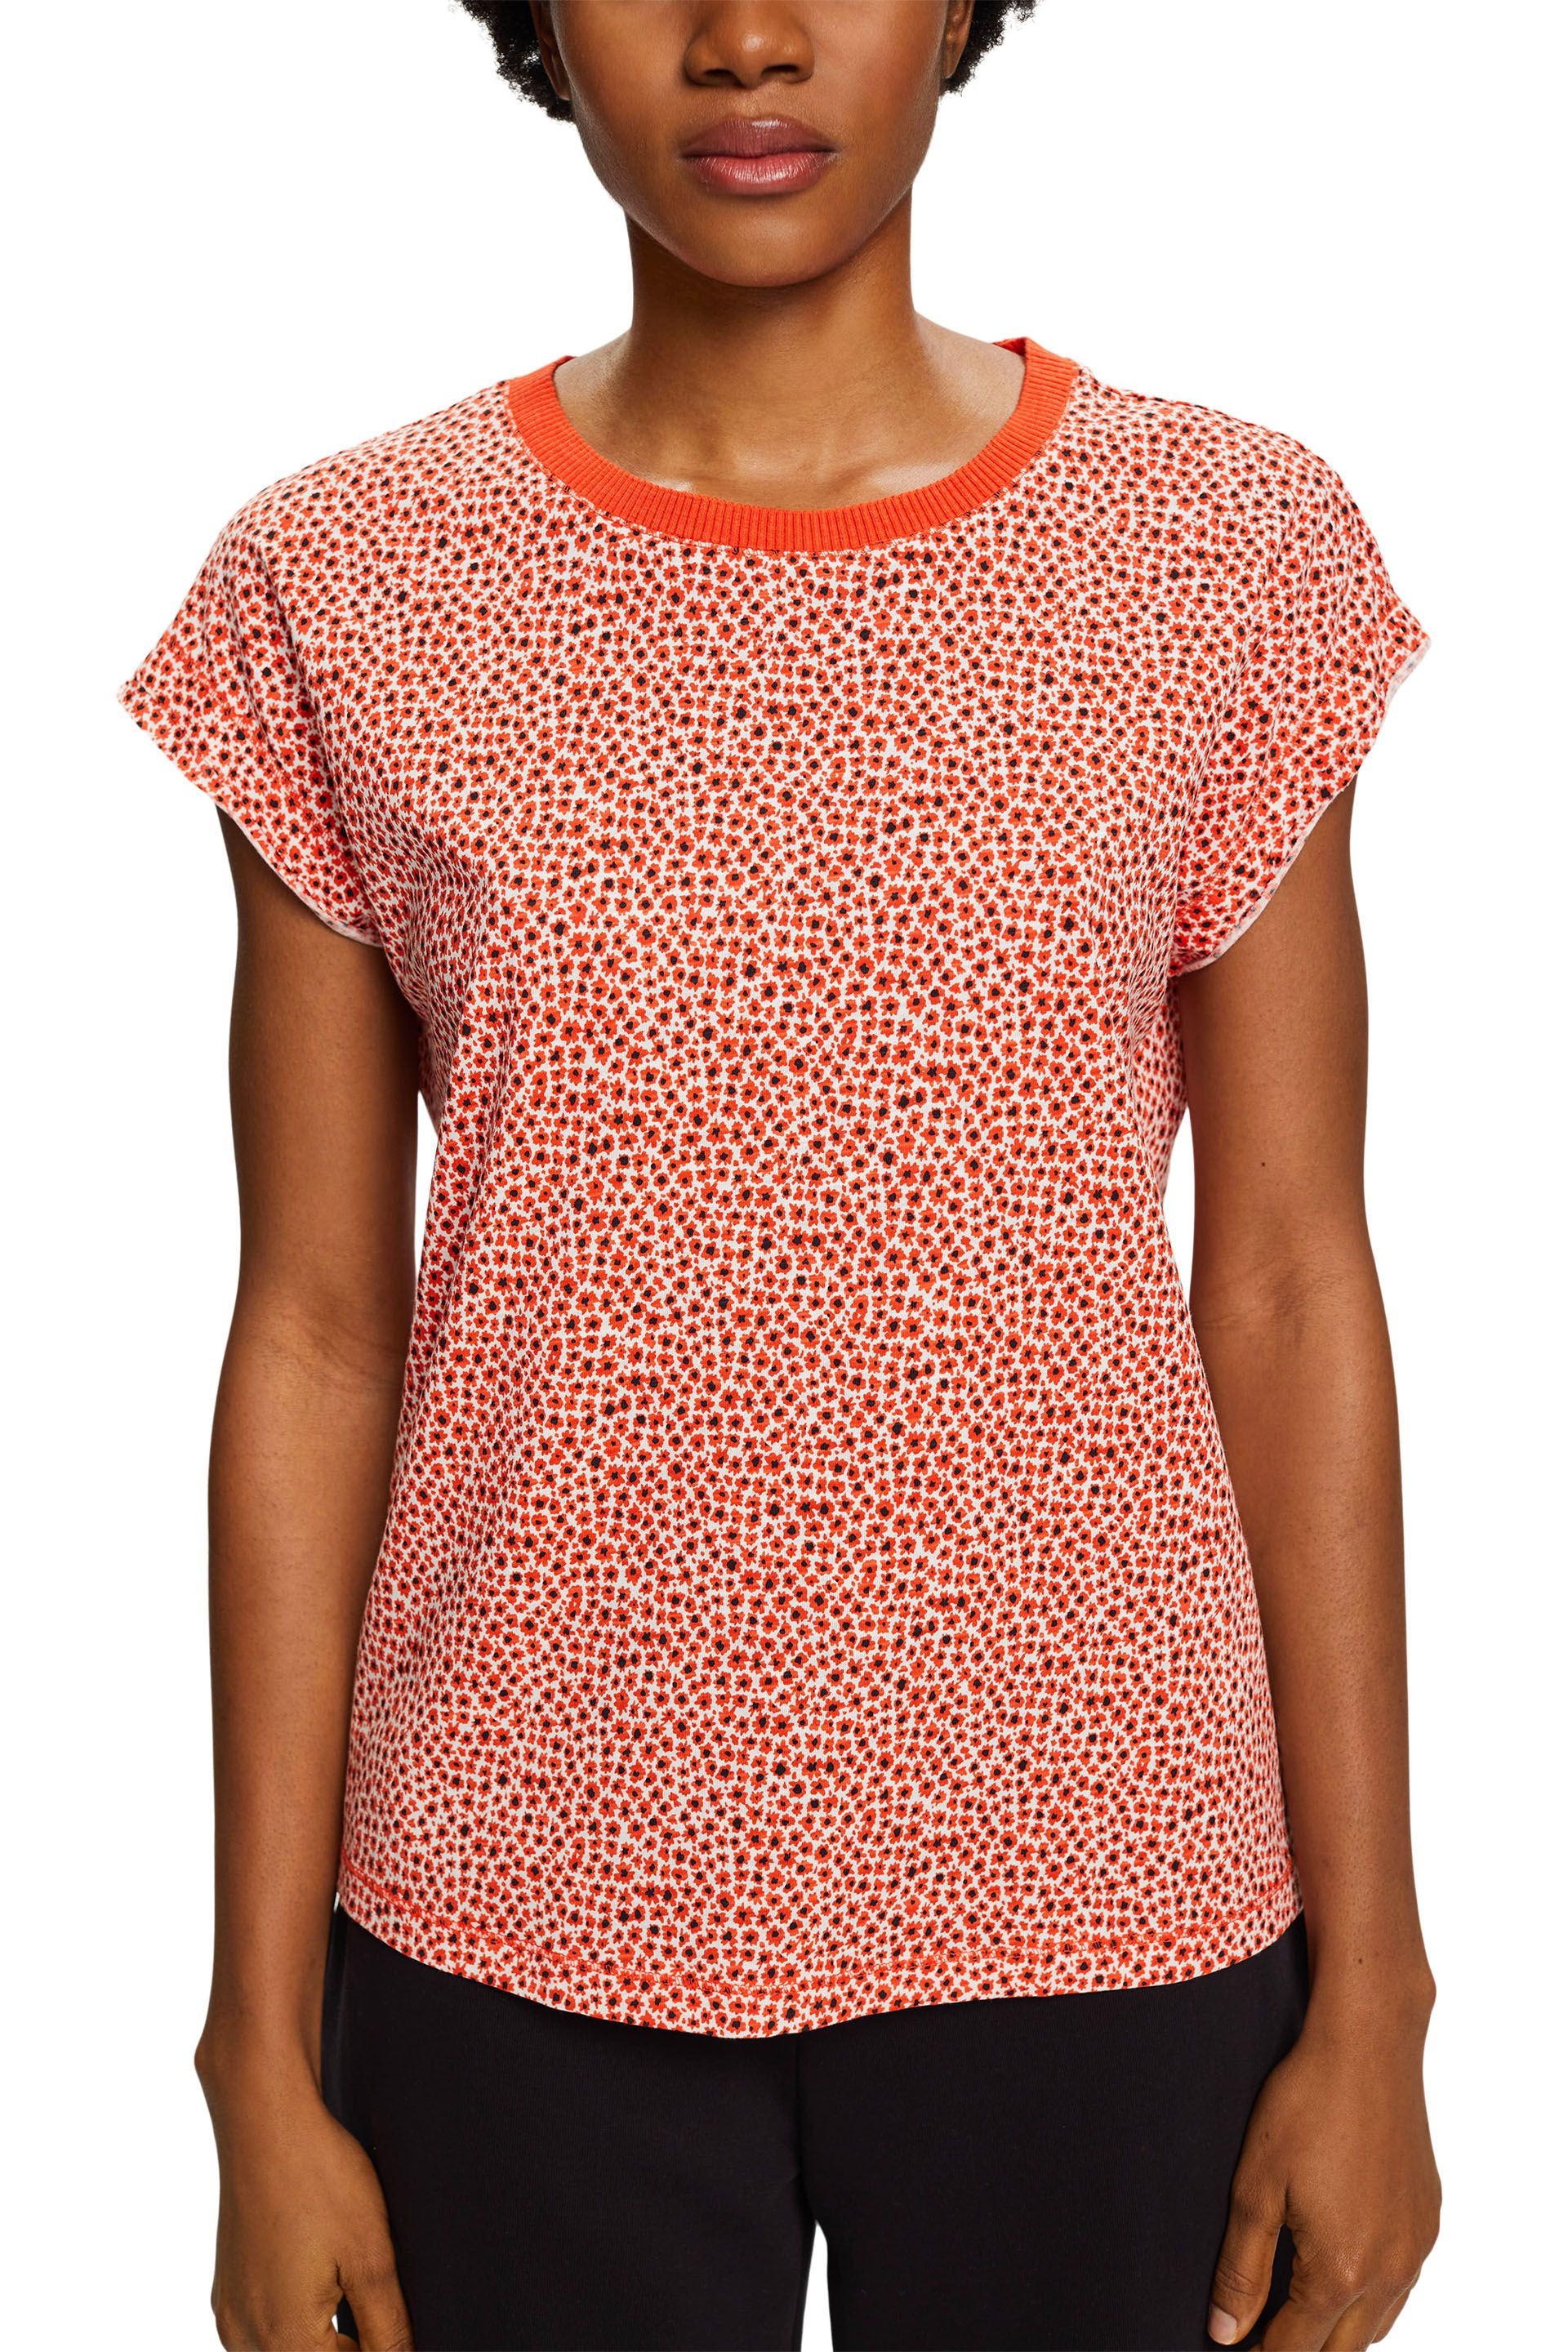 Esprit - T-shirt con motivo floreale all over, Arancione, large image number 2